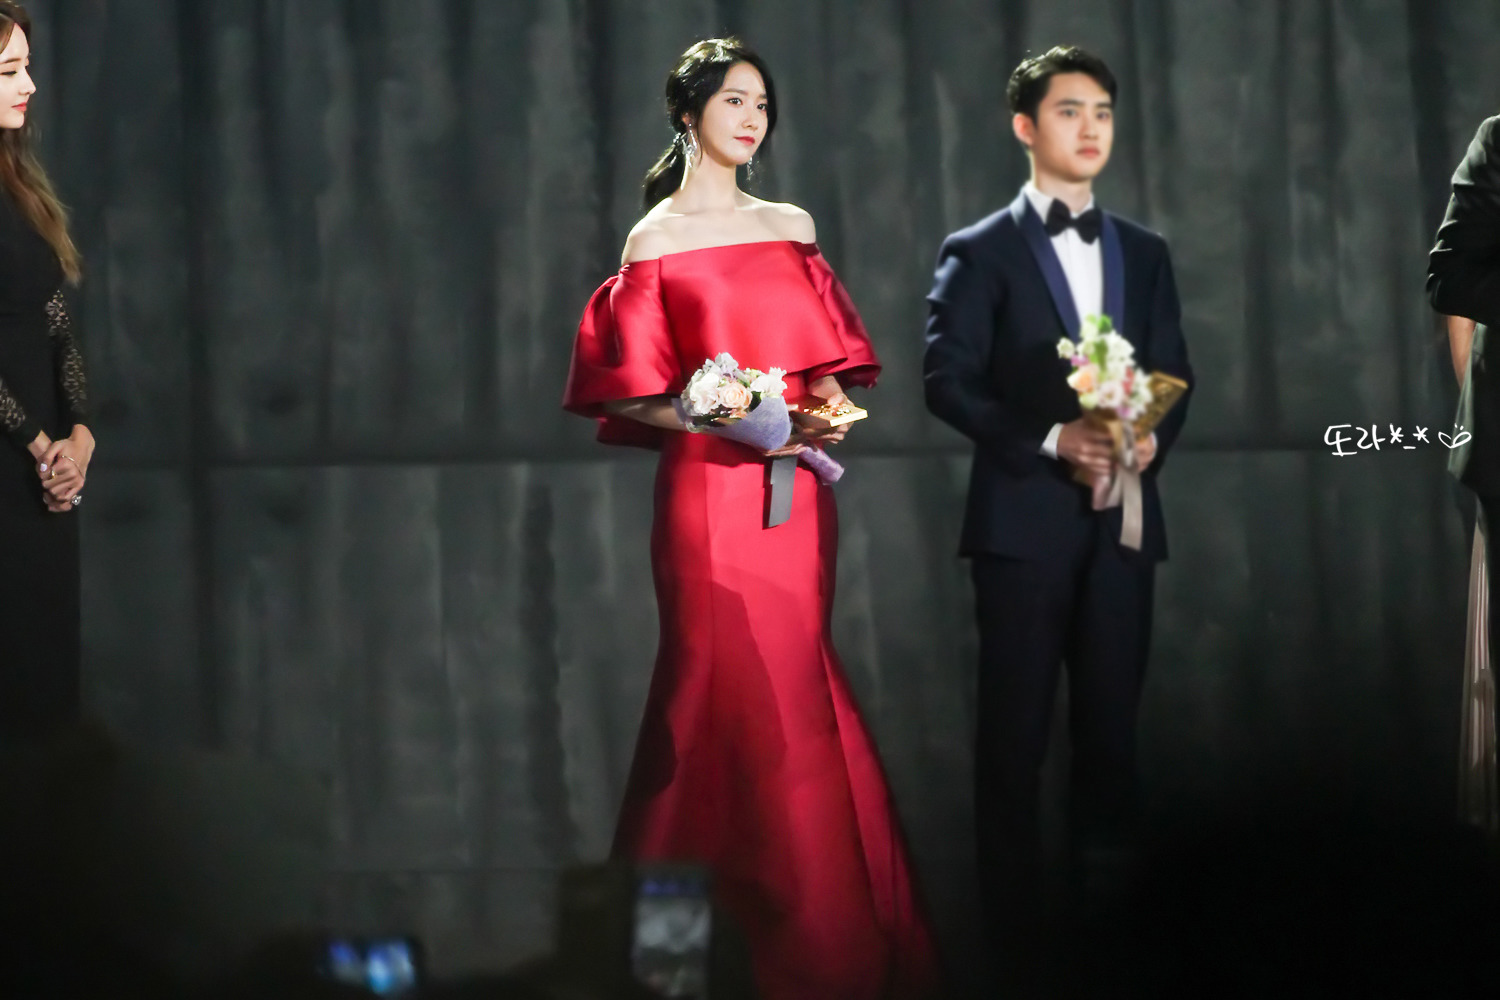 [PIC][03-05-2017]YoonA tham dự "53rd Baeksang Arts Awards" vào chiều nay + Giành "Most Popular Actress or Star Century Popularity Award (in Film)" - Page 2 2723C539590C664F1E8F64